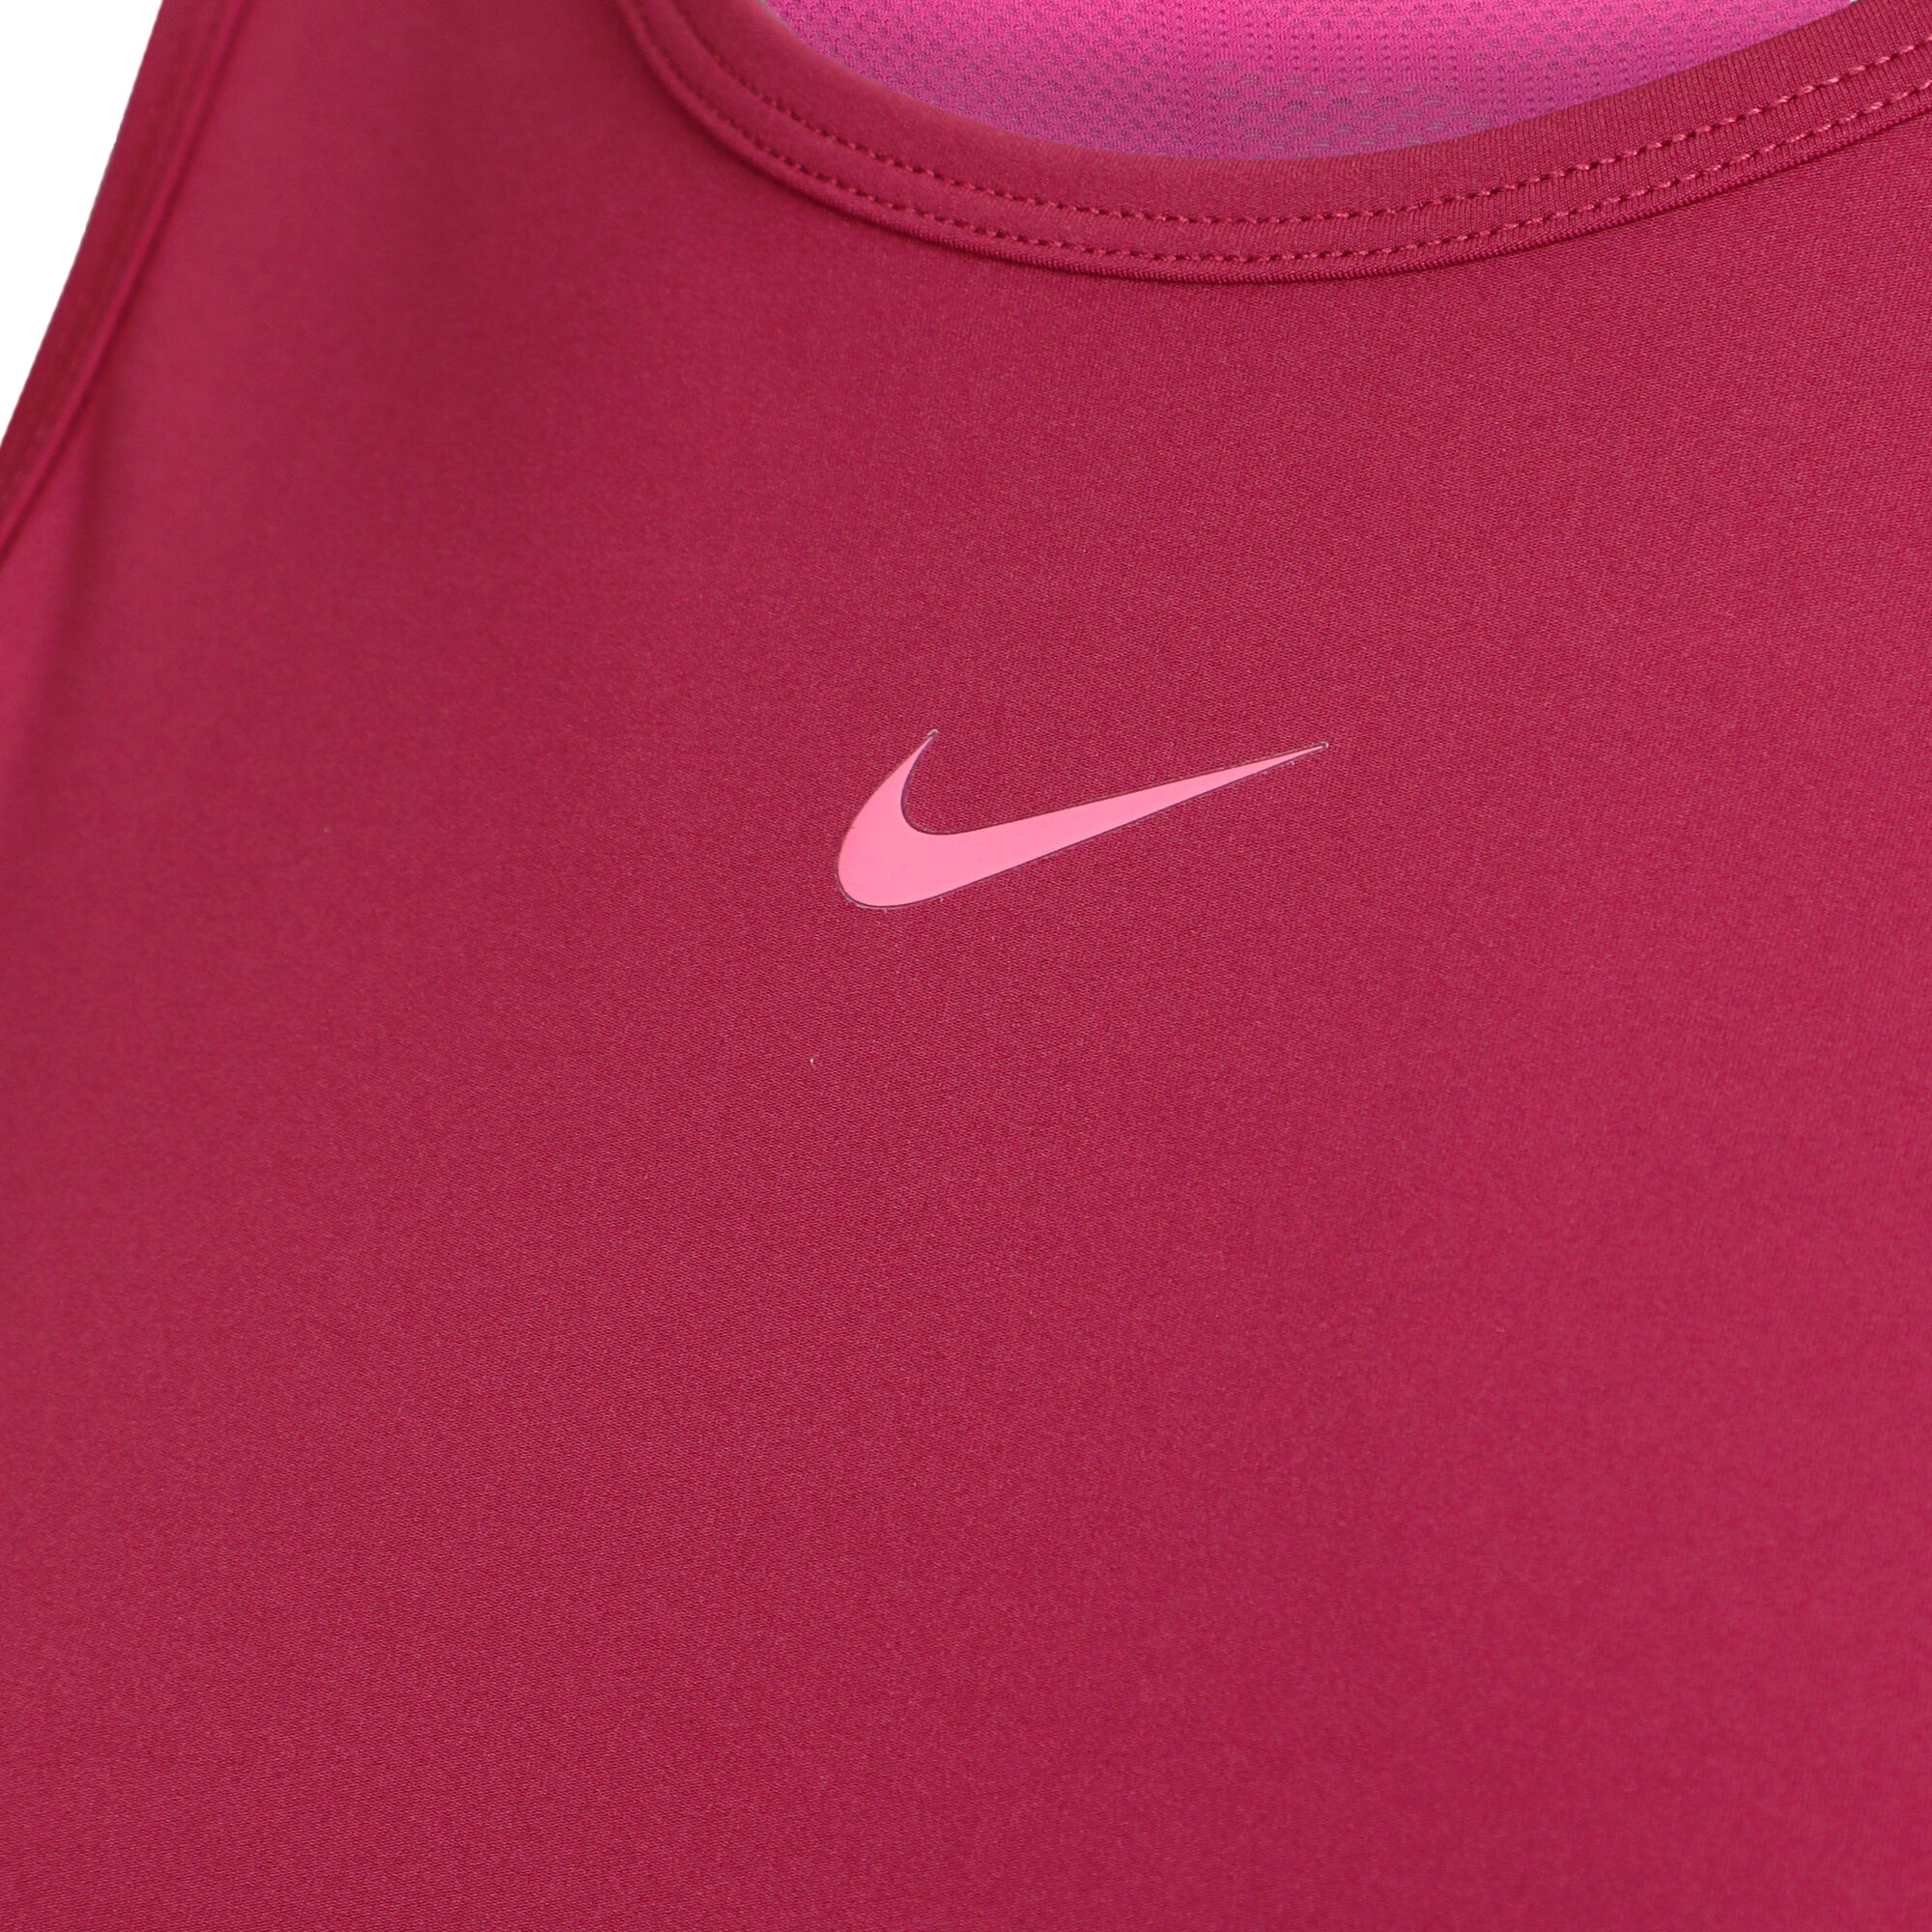 Nike Performance FEMME - Leggings - rosewood/active fuchsia/pink